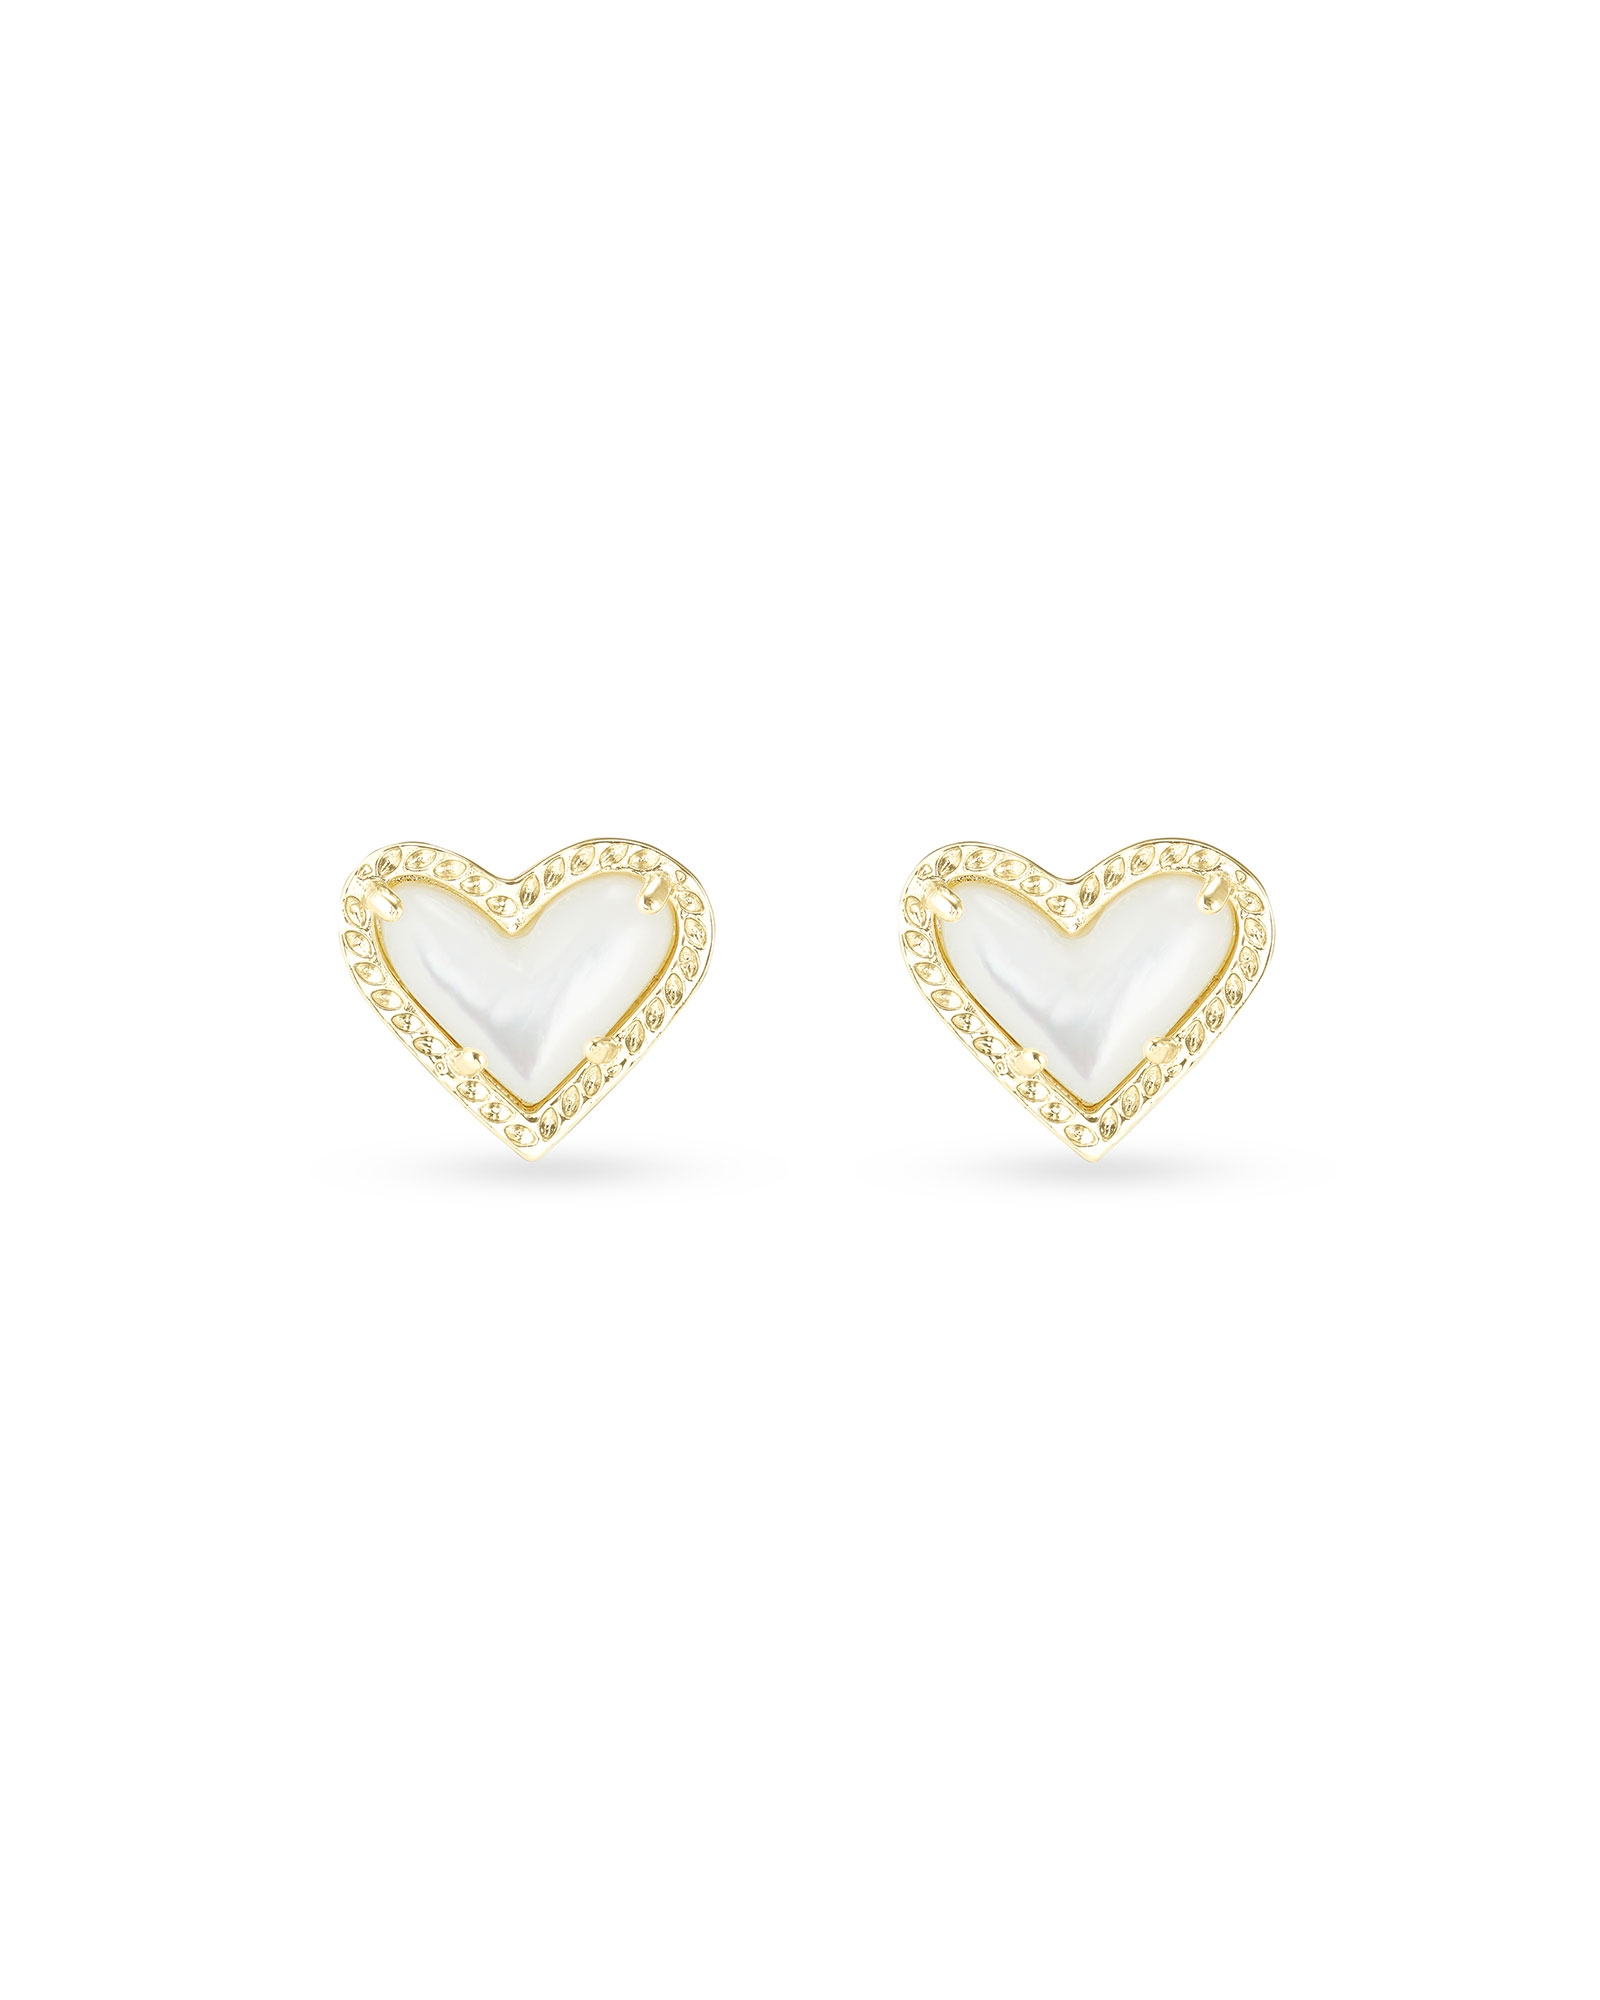 Ari Heart Gold Stud Earrings in Ivory Mother-of-Pearl | Kendra Scott